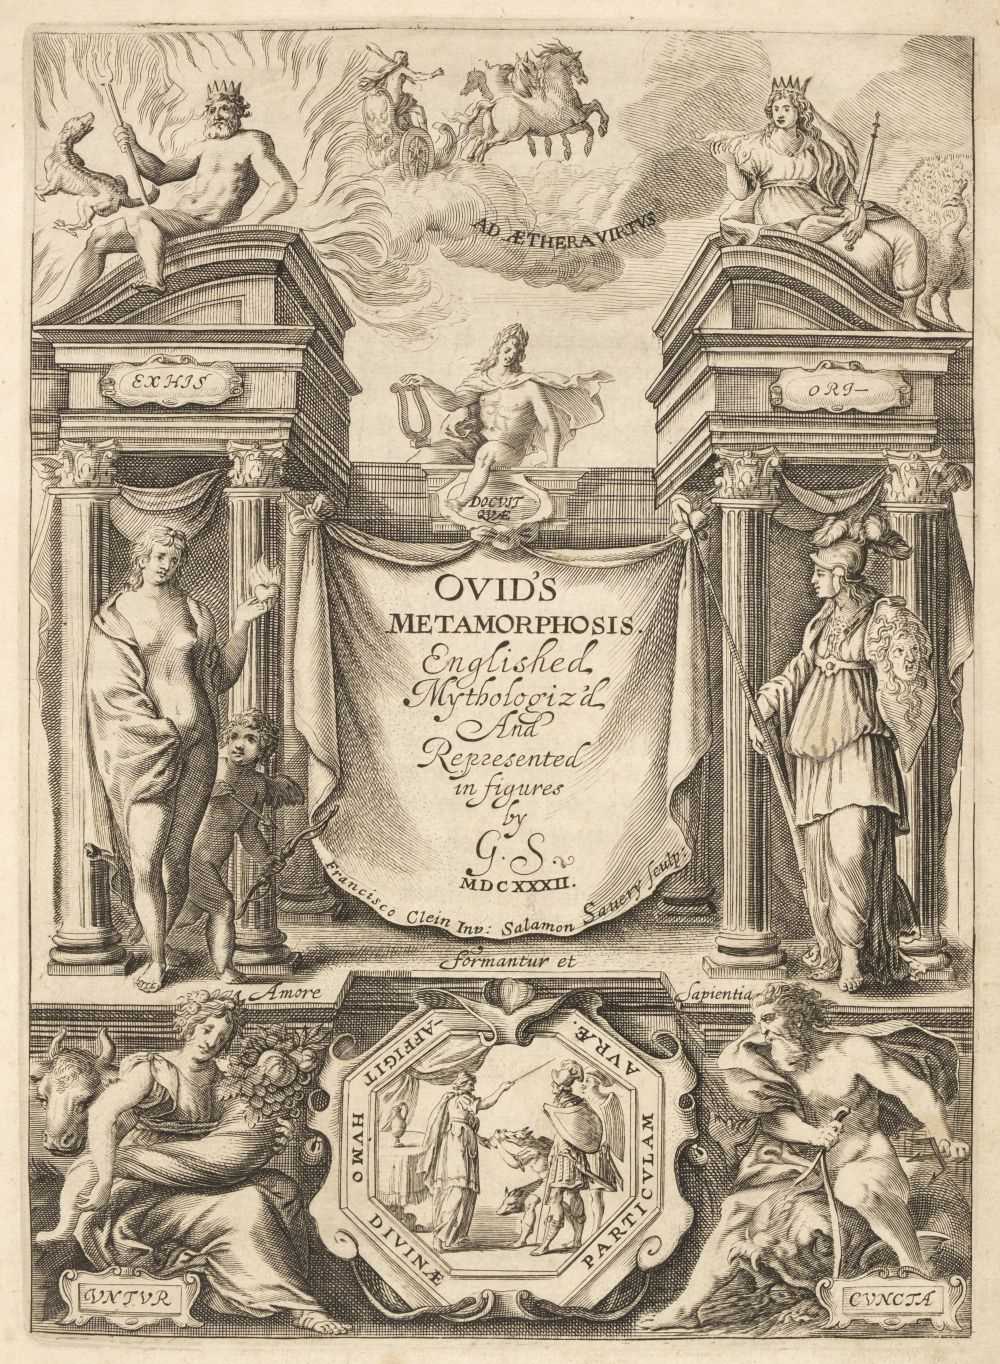 Lot 209 - Ovidius Naso (Publius). Ovid's Metamorphosis Englished..., 1632